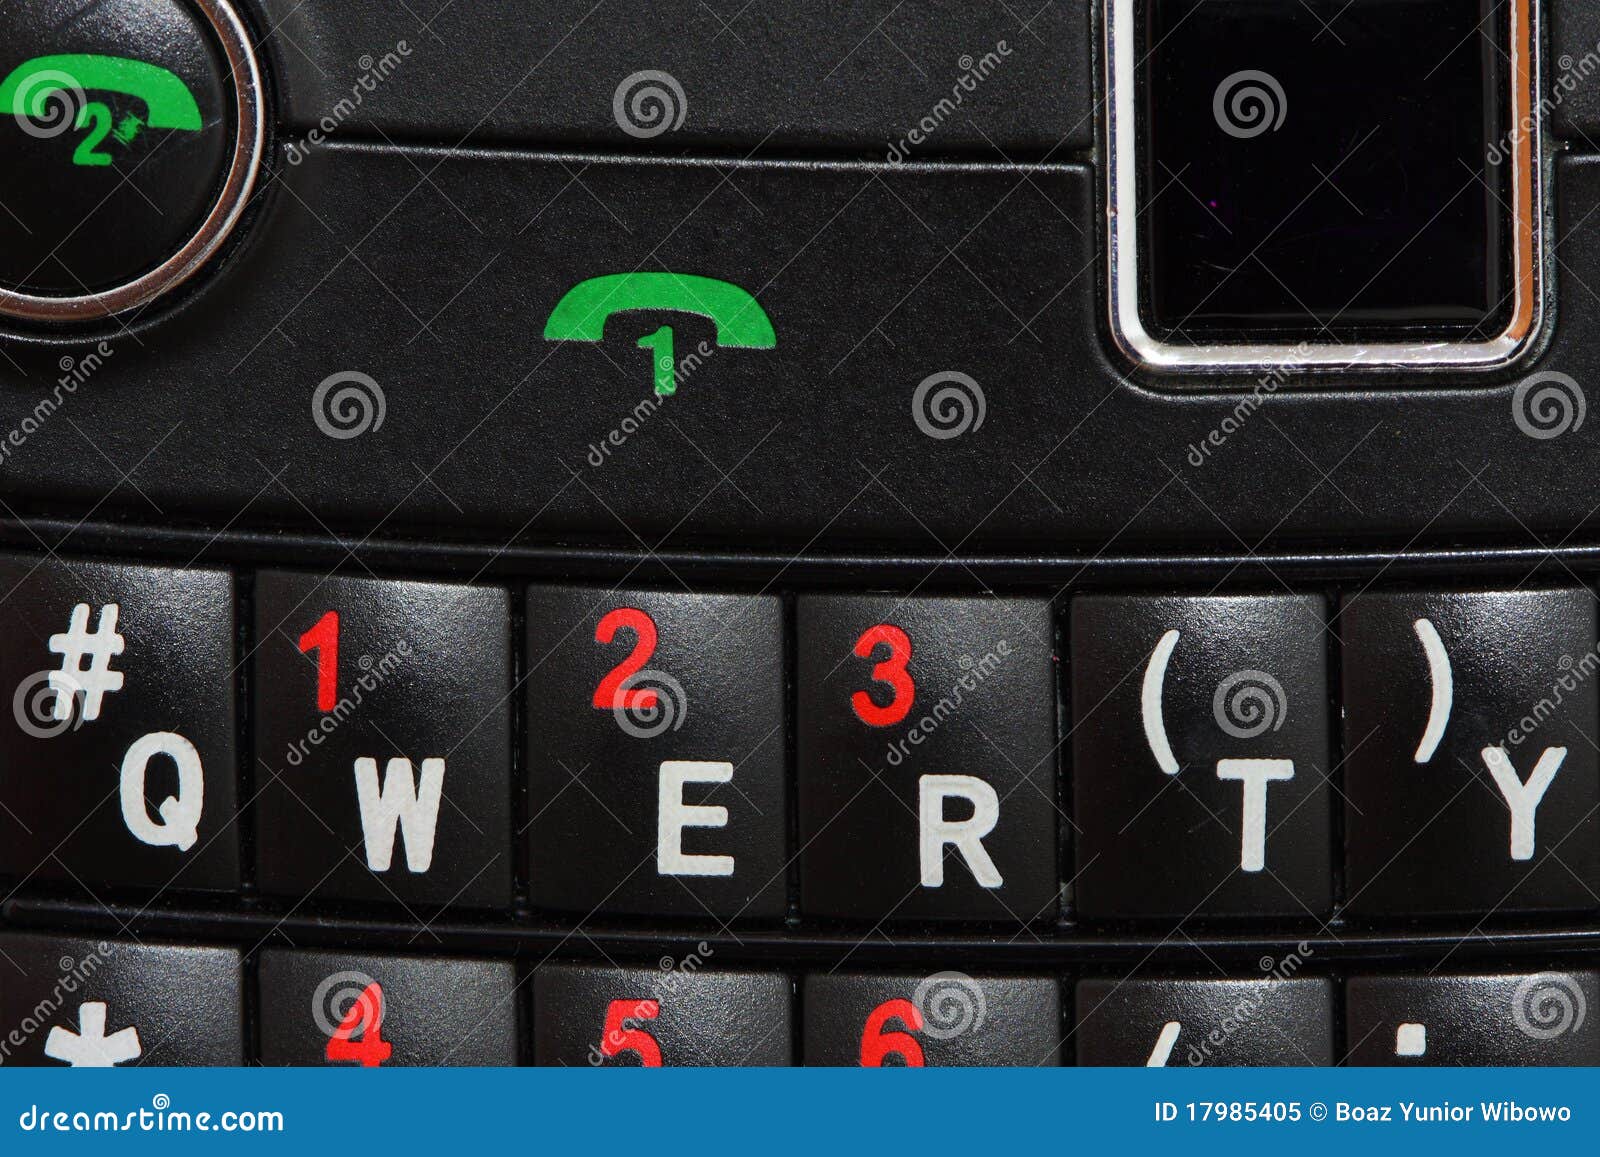 smart phone keypad qwerty close up